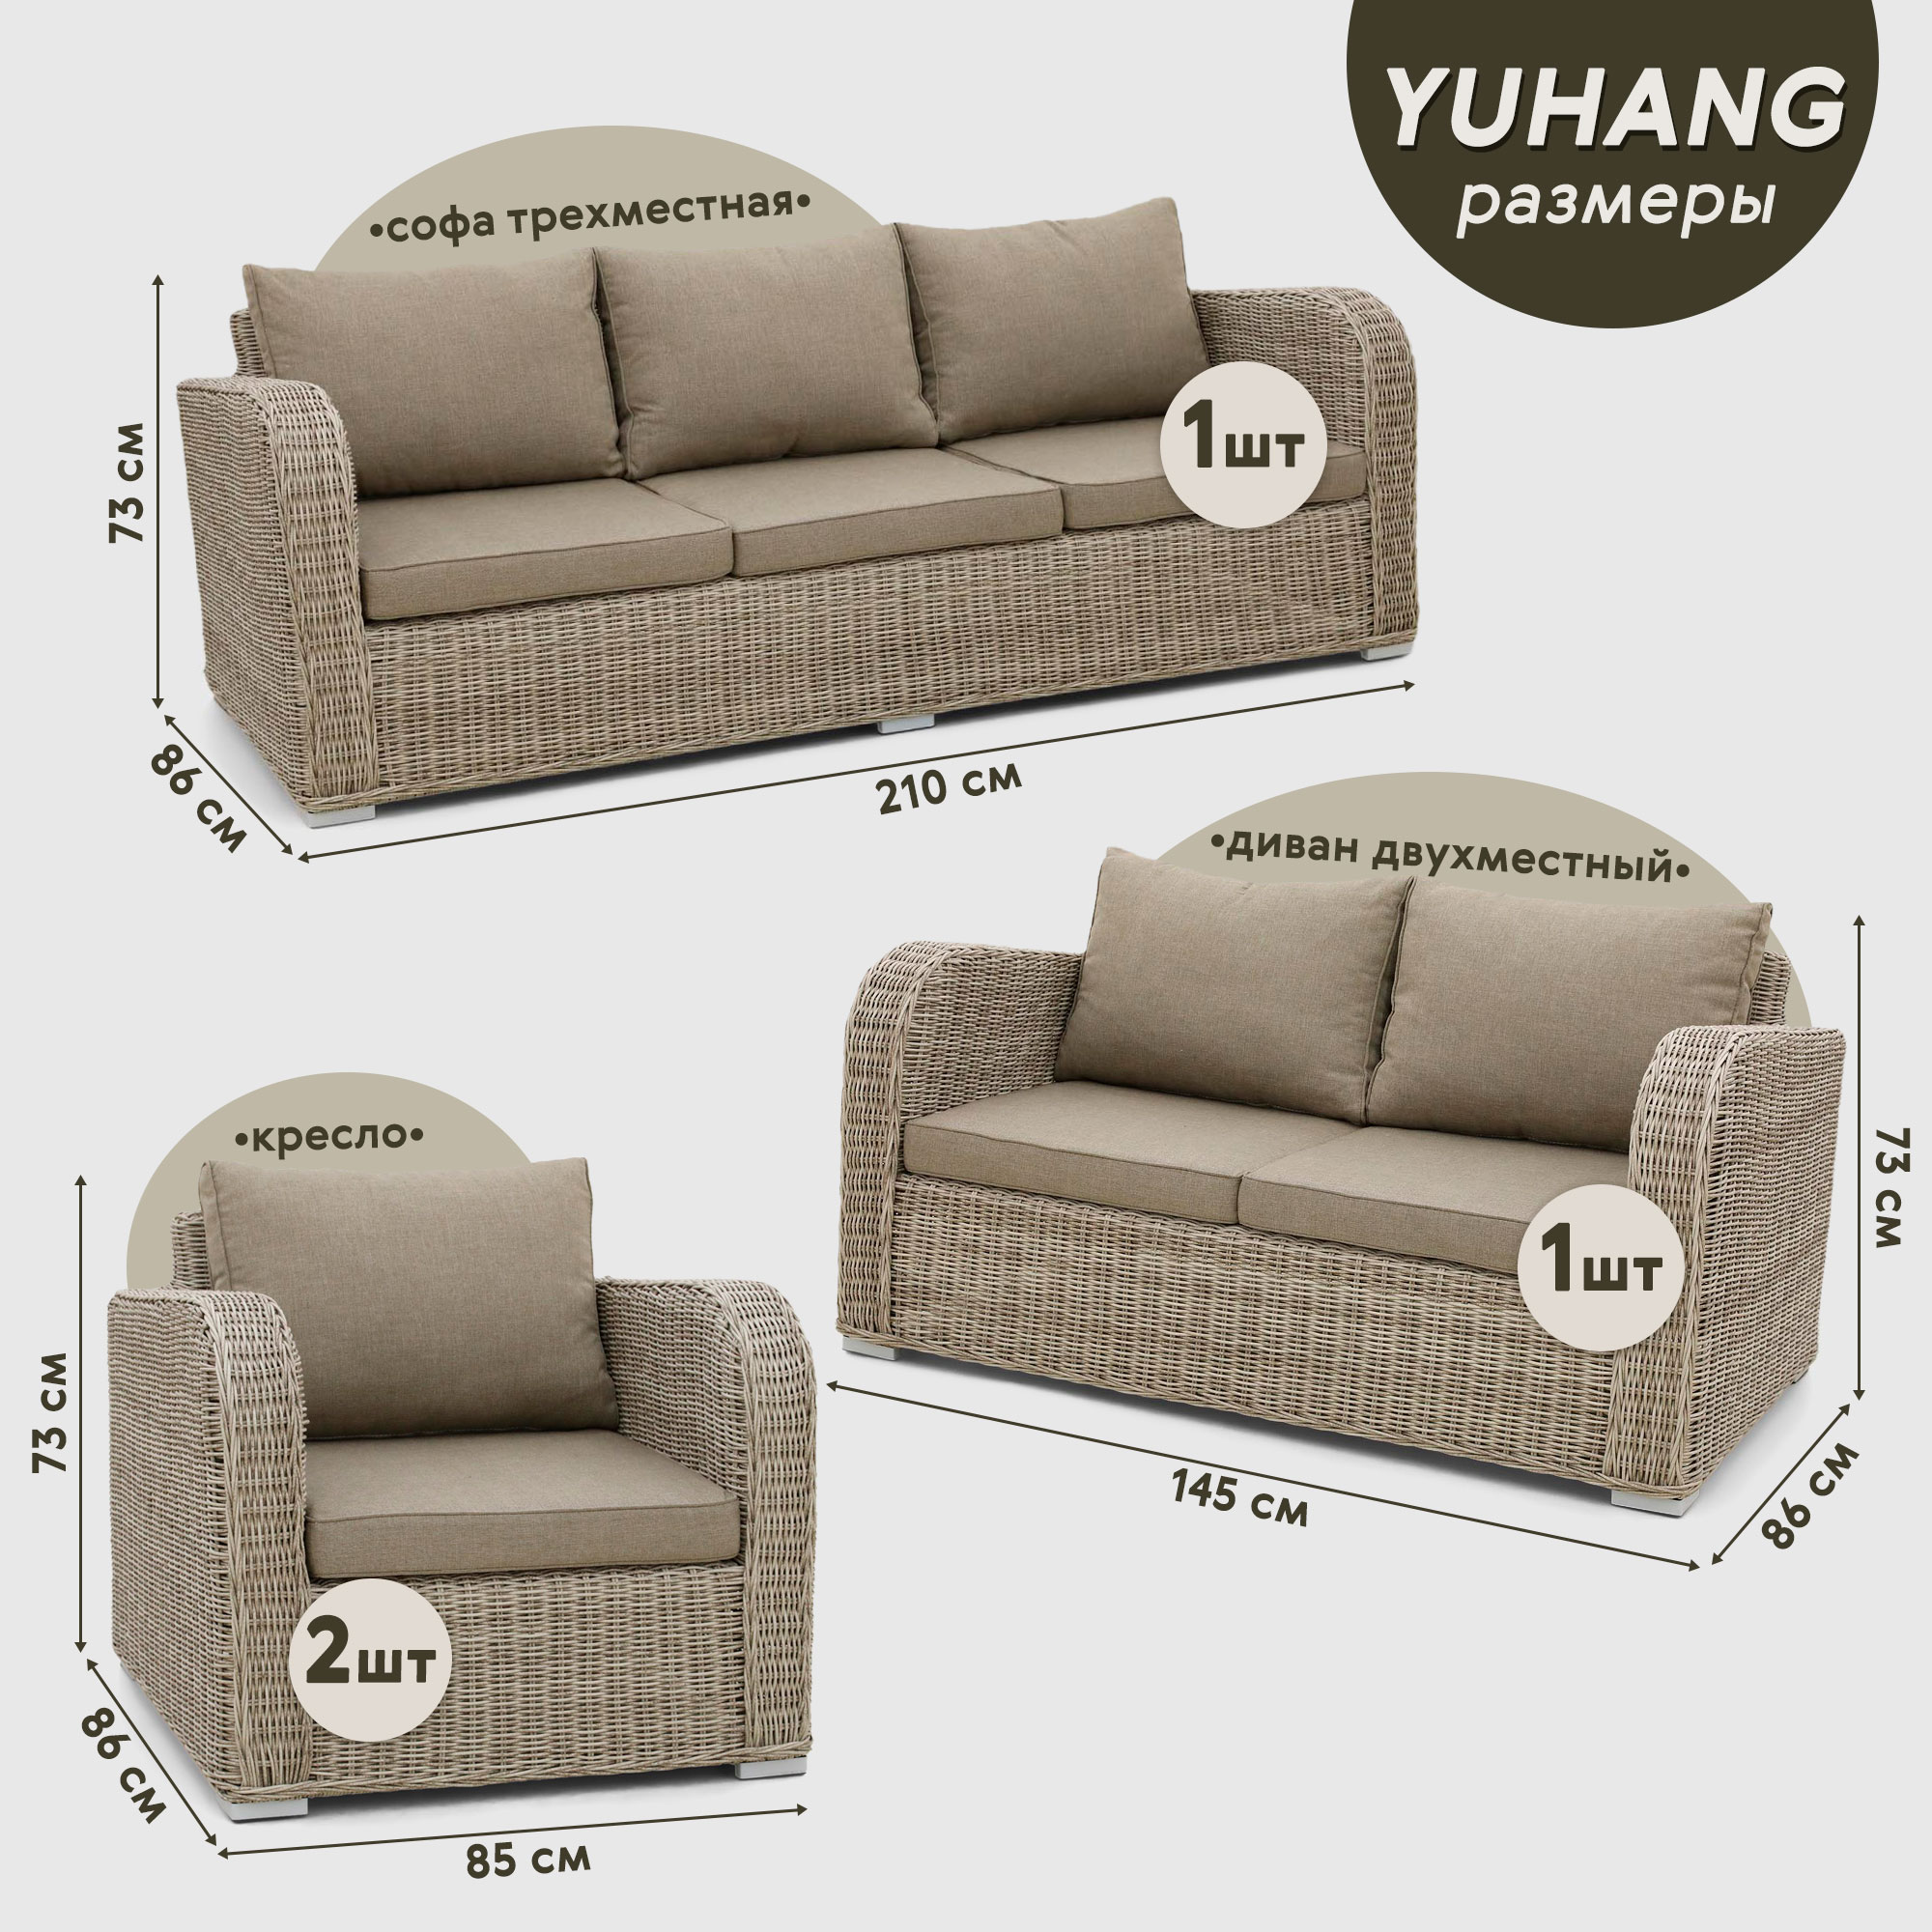 Комплект мебели Yuhang бежево-коричневый 7 предметов, размер 210х86х73/145х86х73 - фото 4